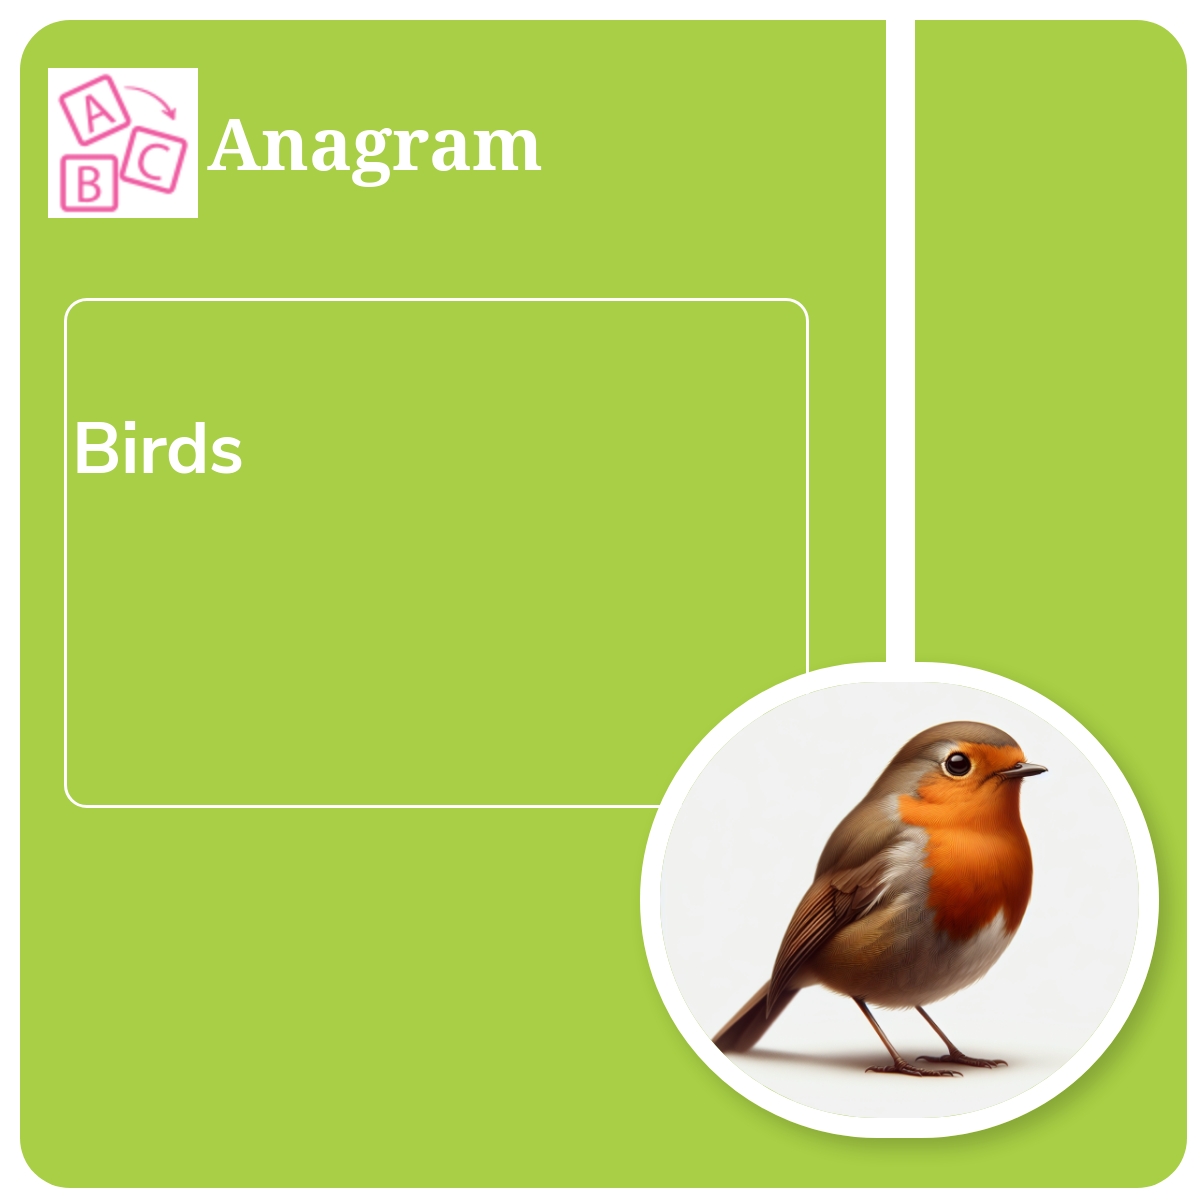 Simple Anagram: Birds